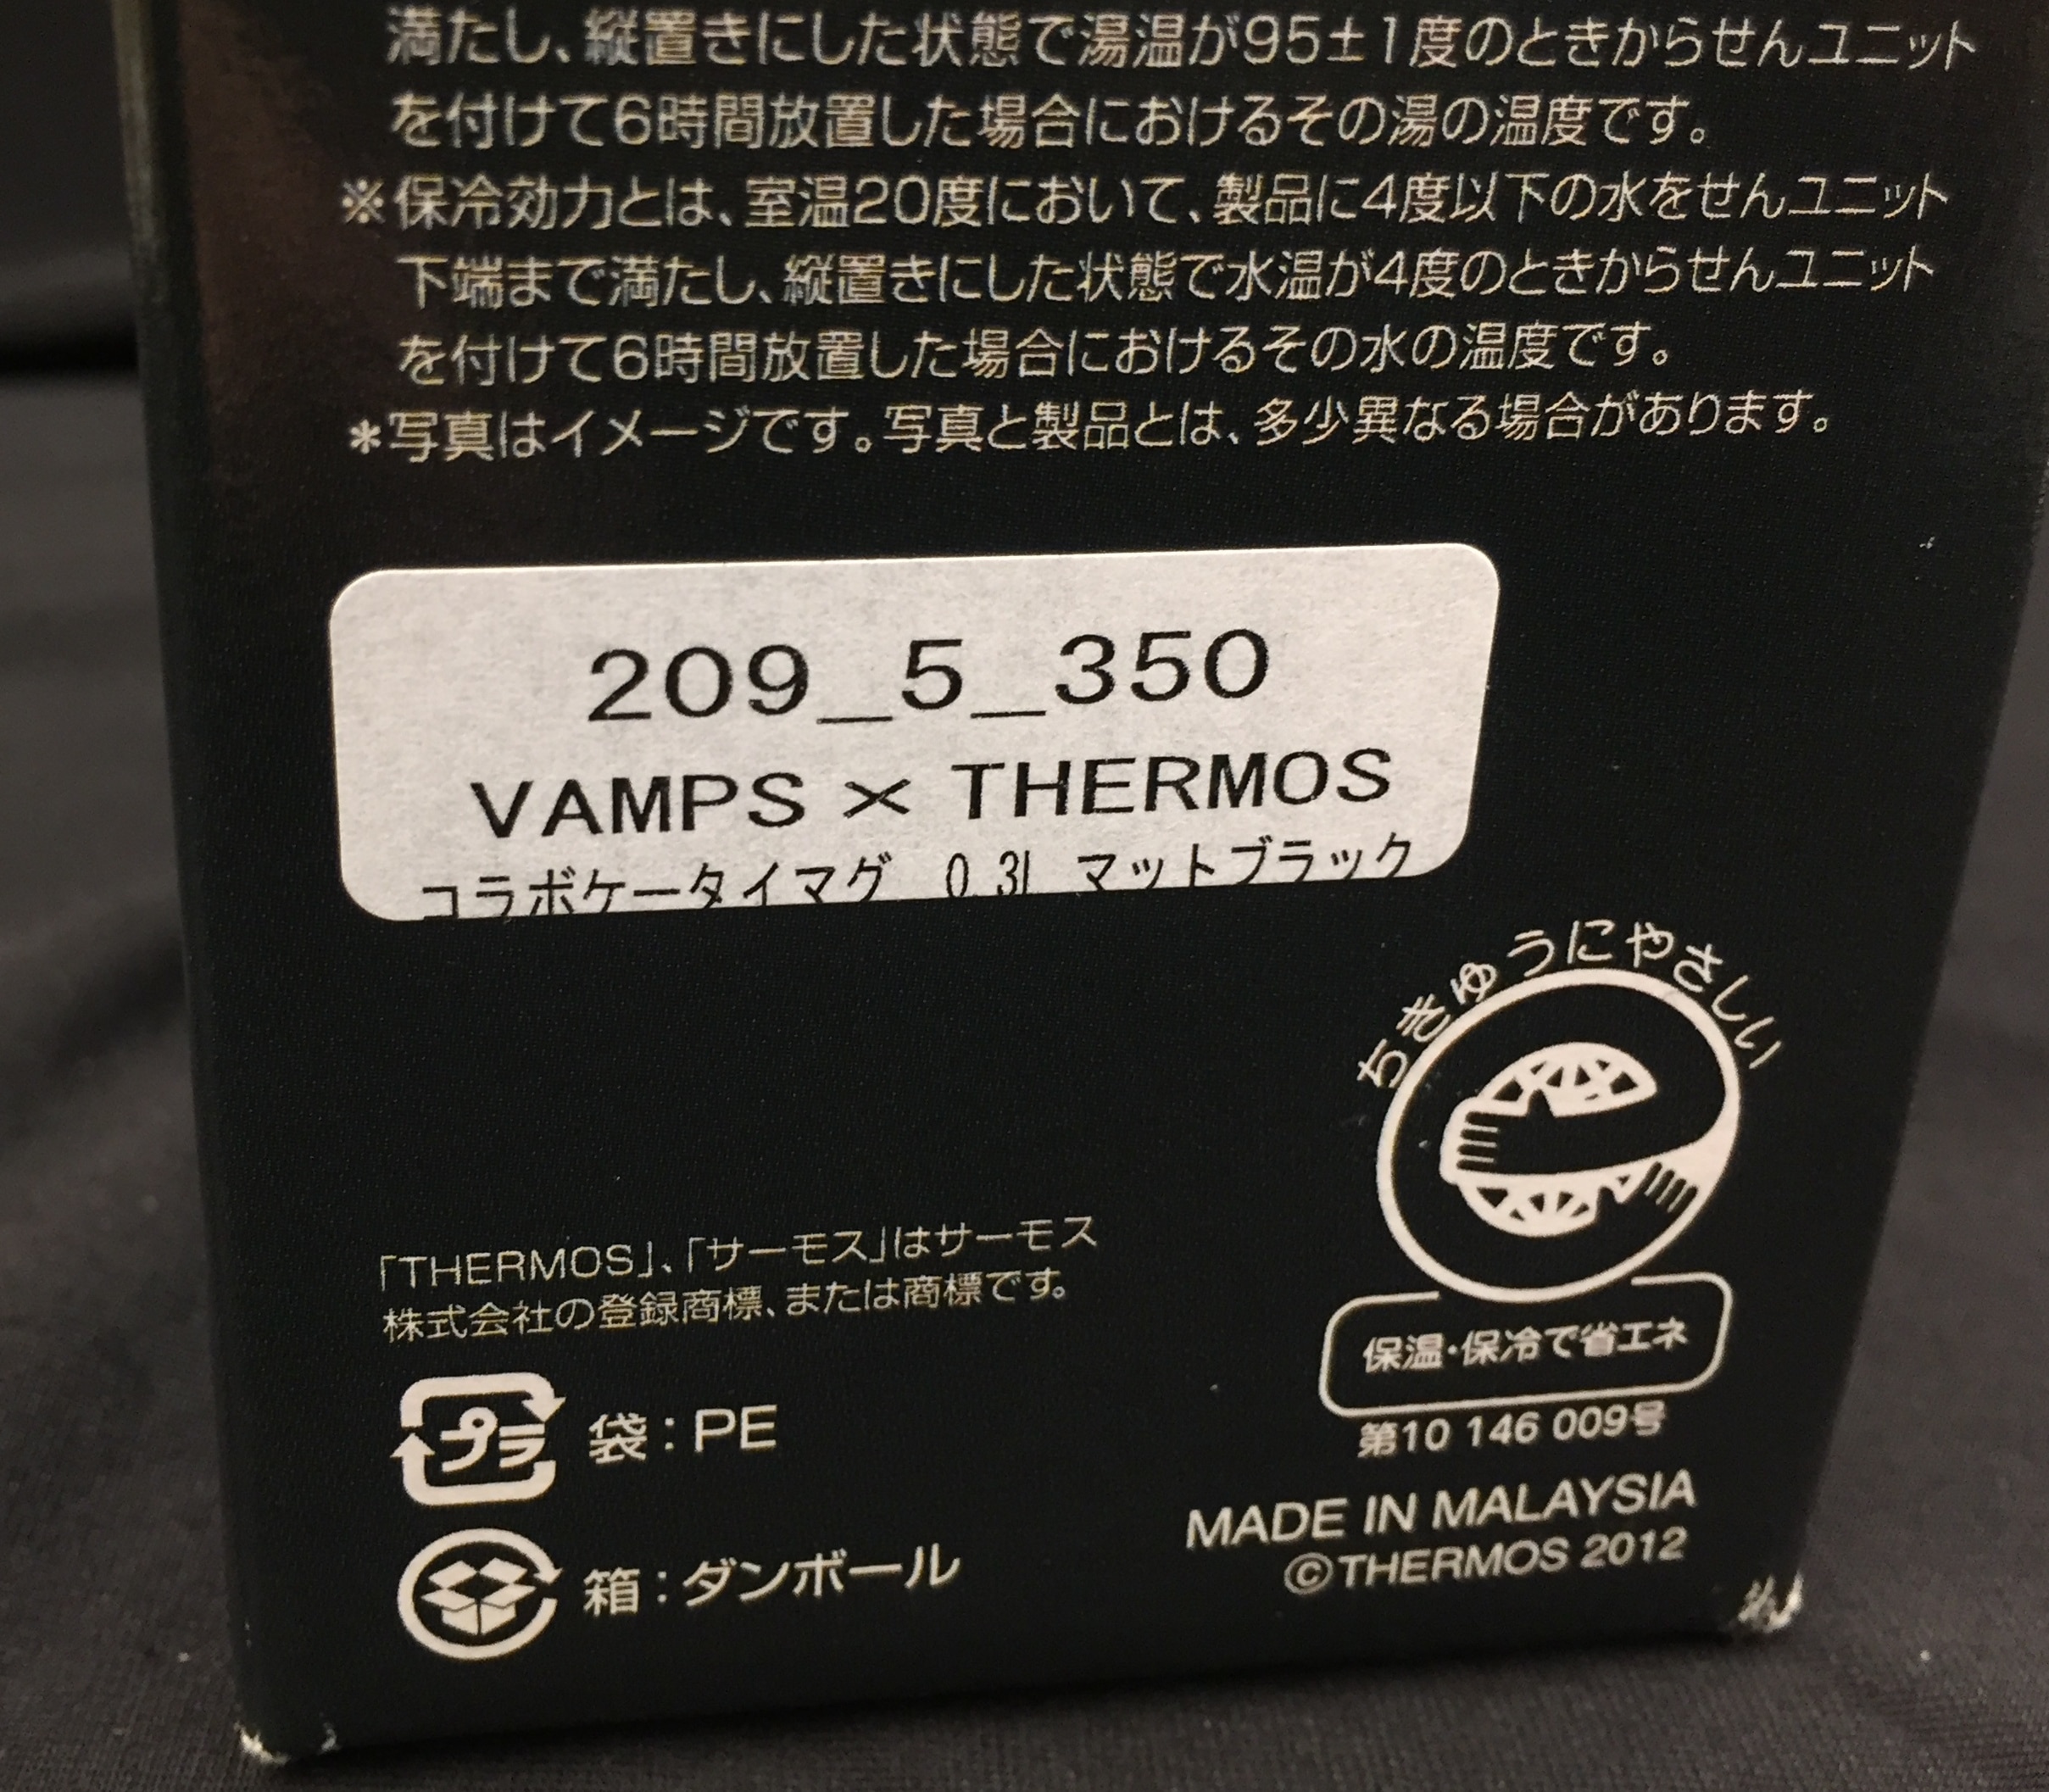 VAMPS VAMPS x THERMOS Collaboration Mobile Phone Mug (Mad Black